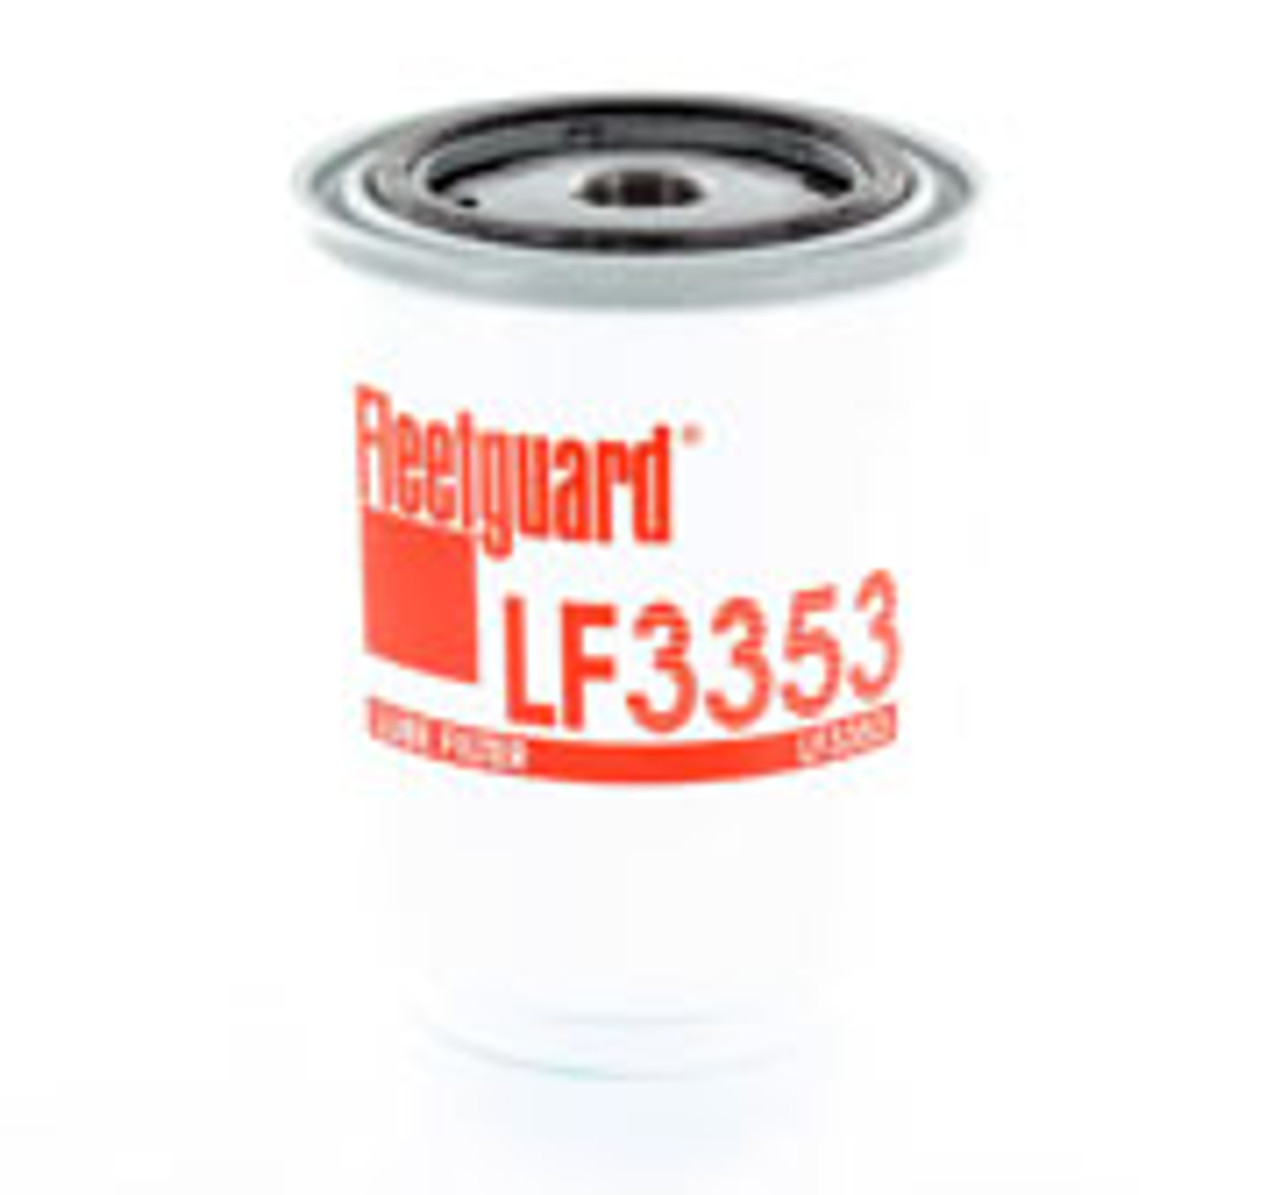 LF3353: Fleetguard Spin-On Oil Filter